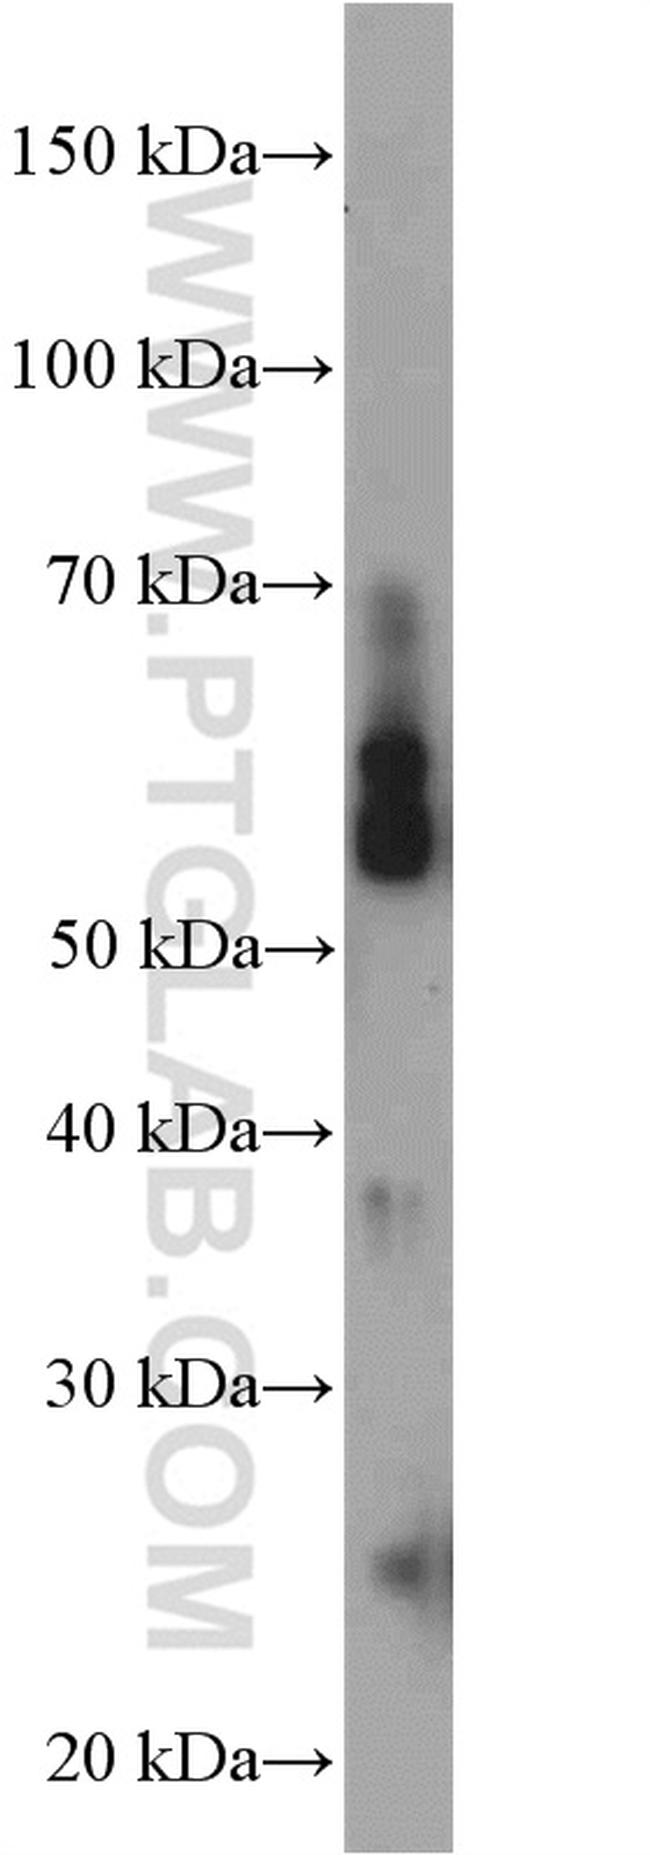 NEK3 Antibody in Western Blot (WB)